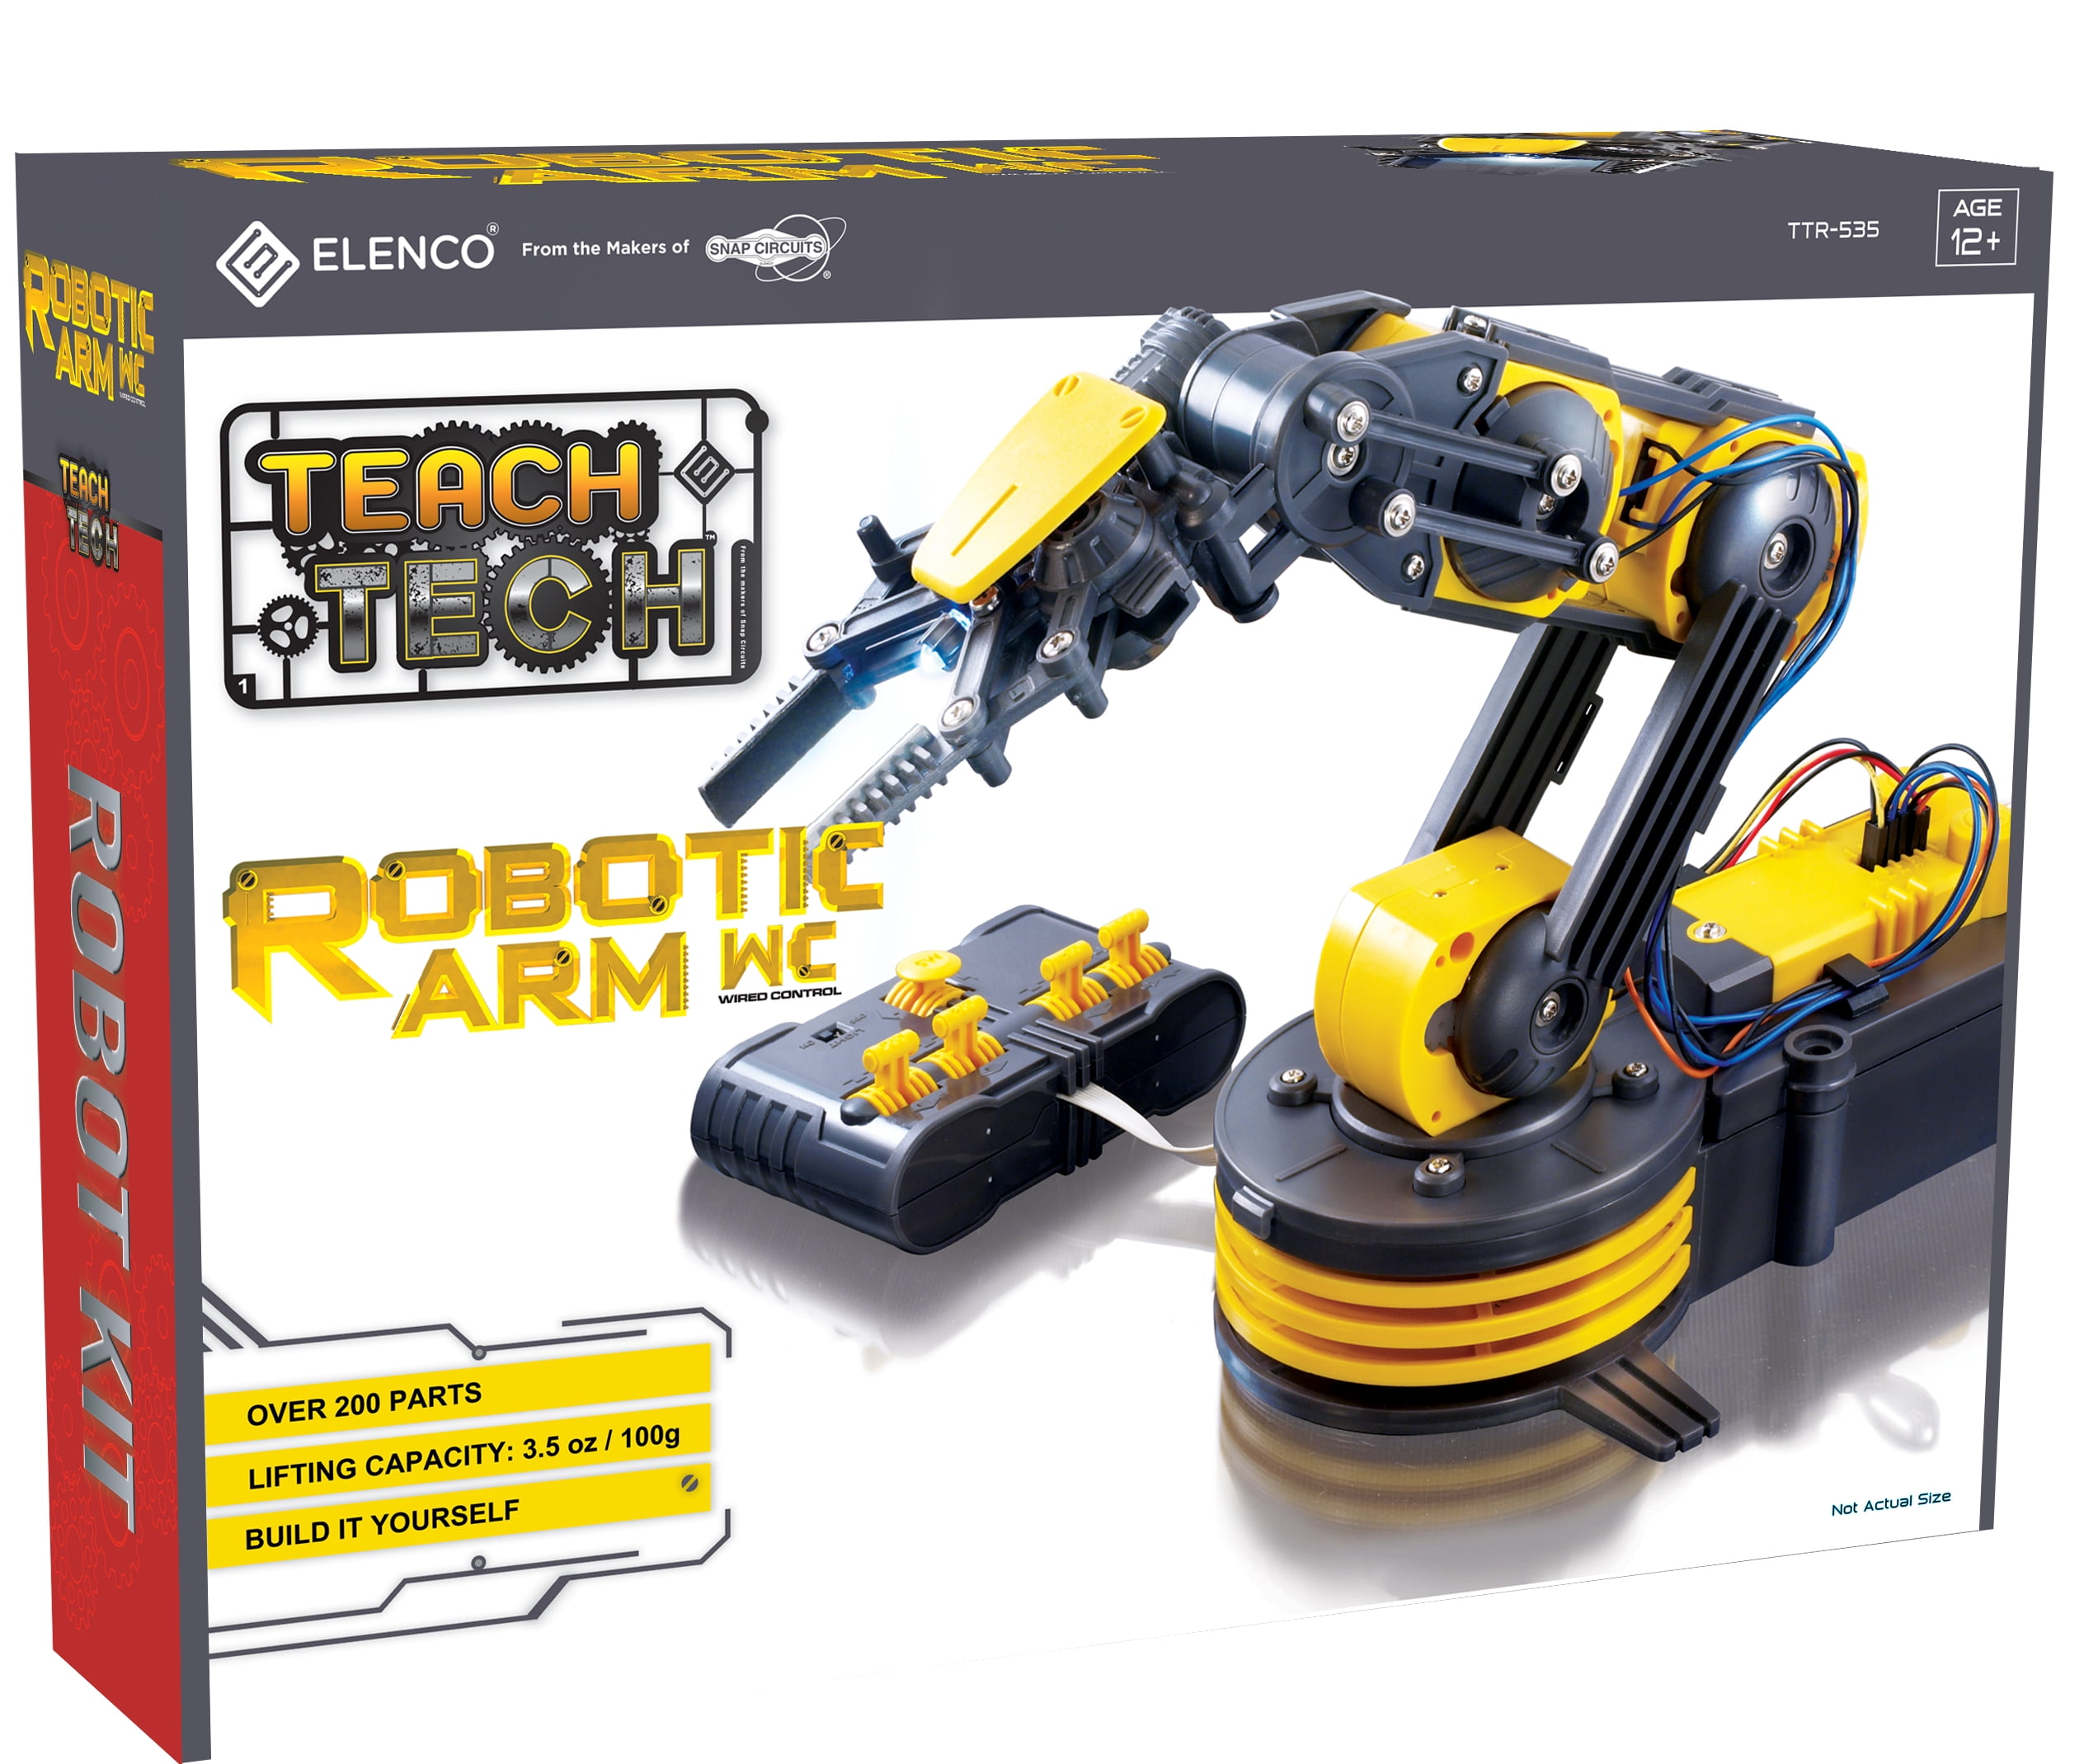 Teach Robotic Arm Wire - Walmart.com